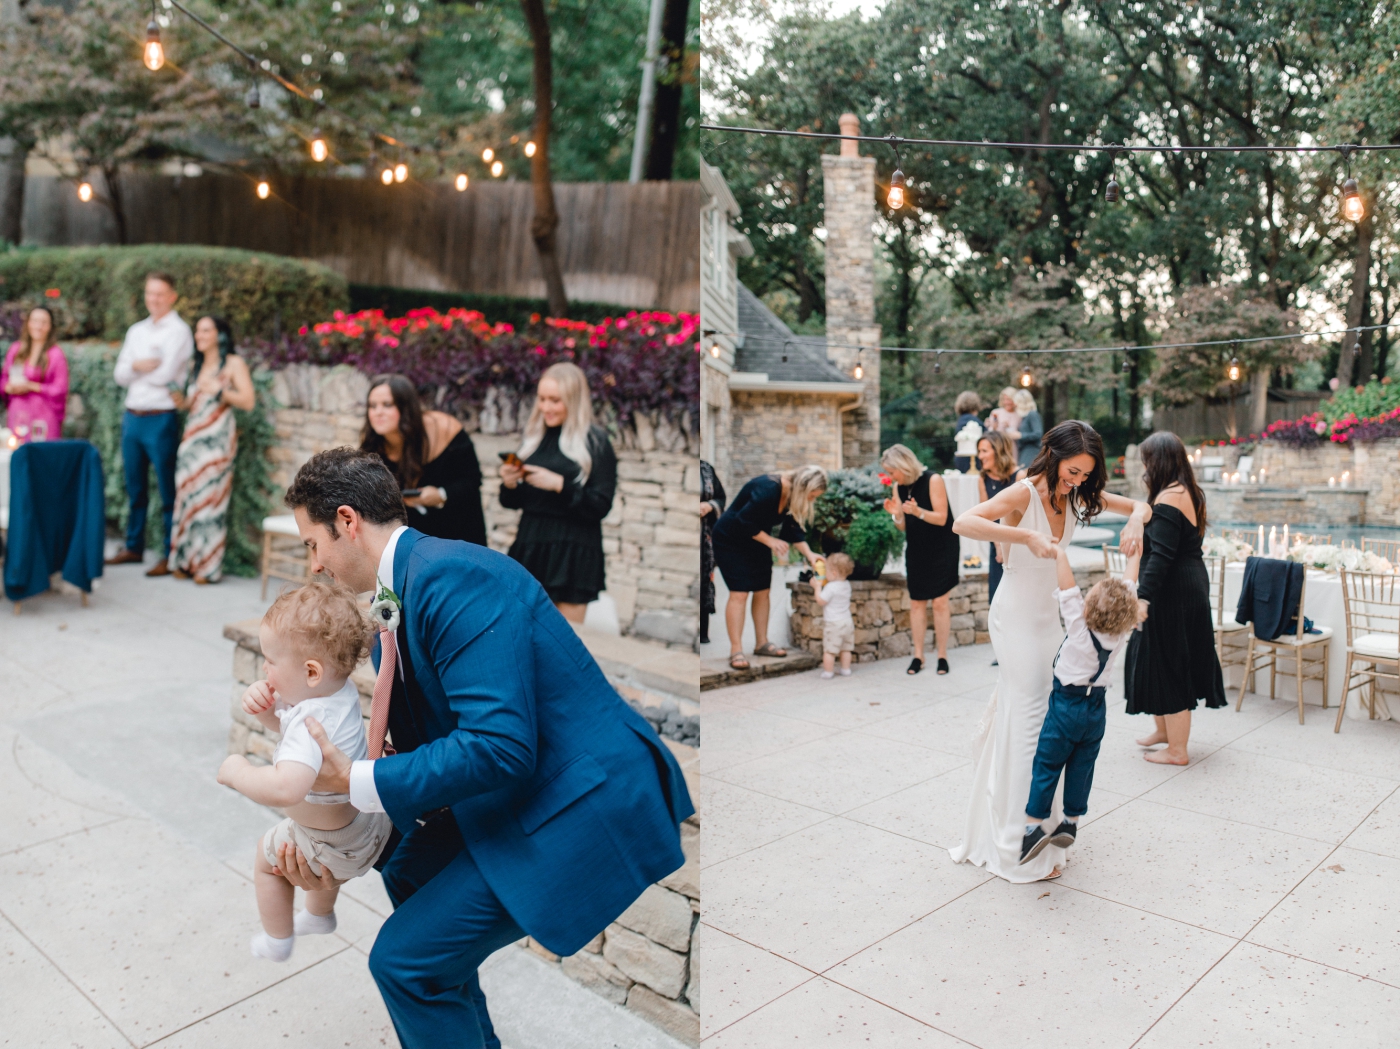 Backyard wedding in Tulsa, Oklahoma